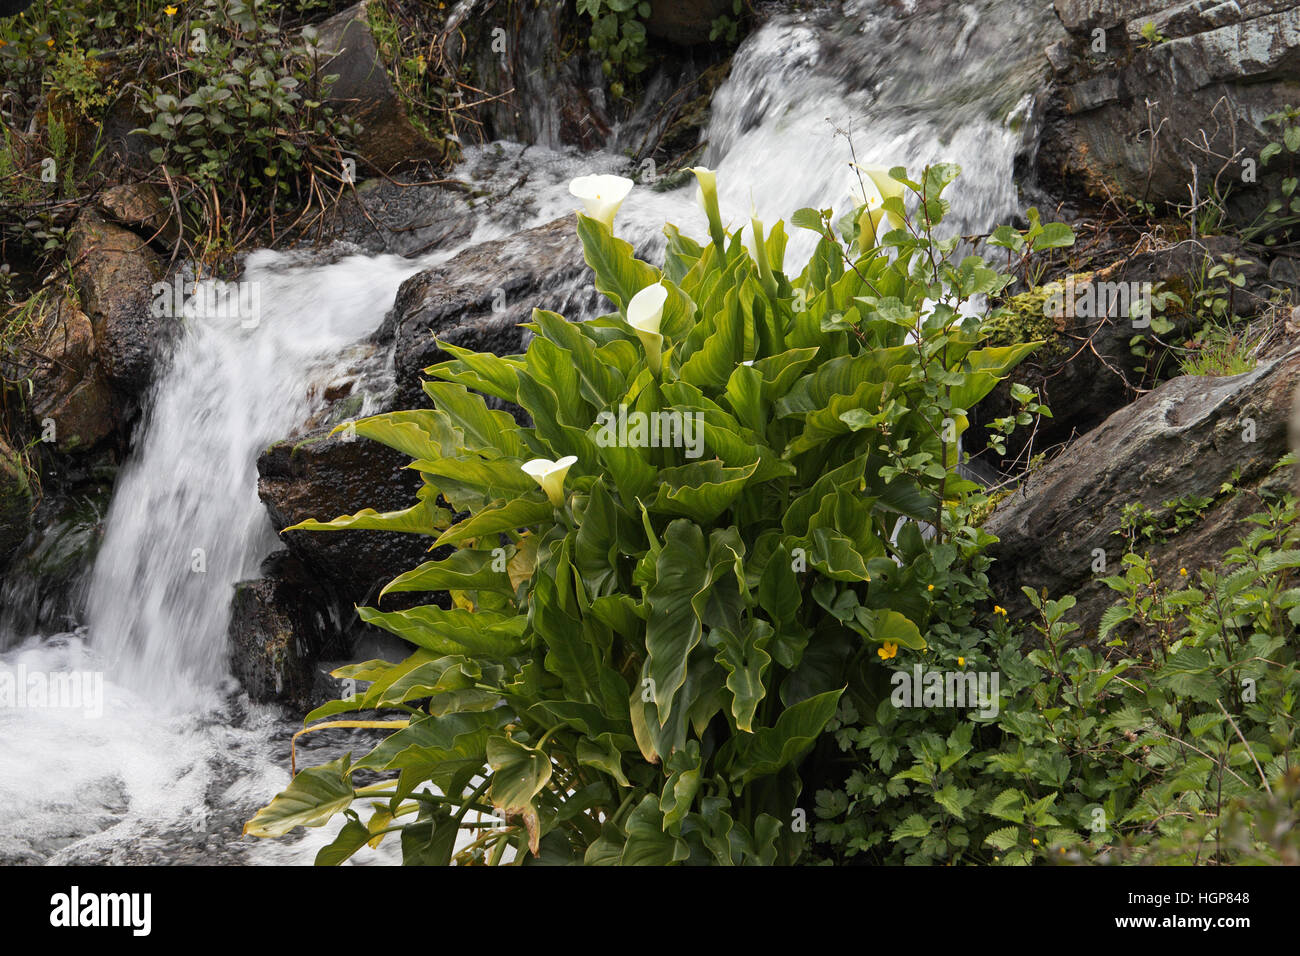 Arum lily Zantedeschia aethiopica in mountain stream Corsica France Stock Photo